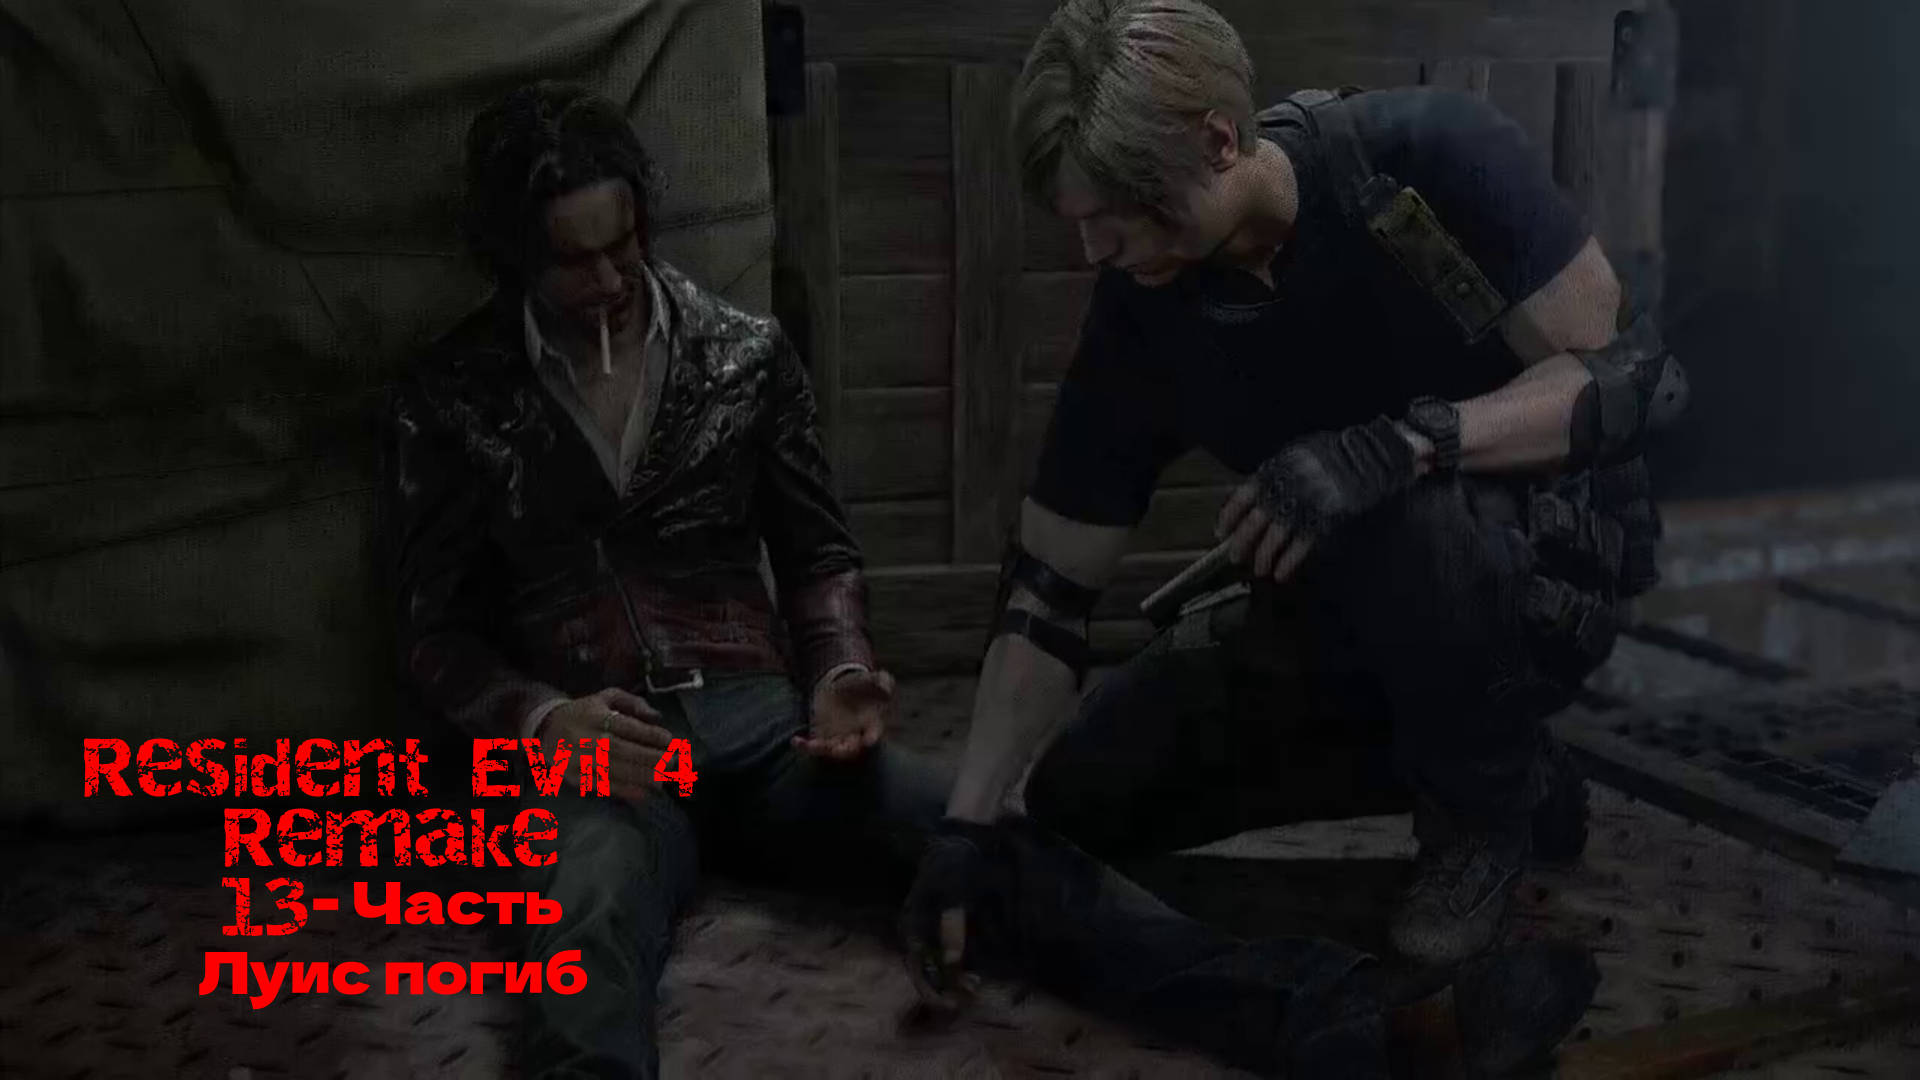 Resident Evil 4 Remake - 13 Часть
Луис погиб